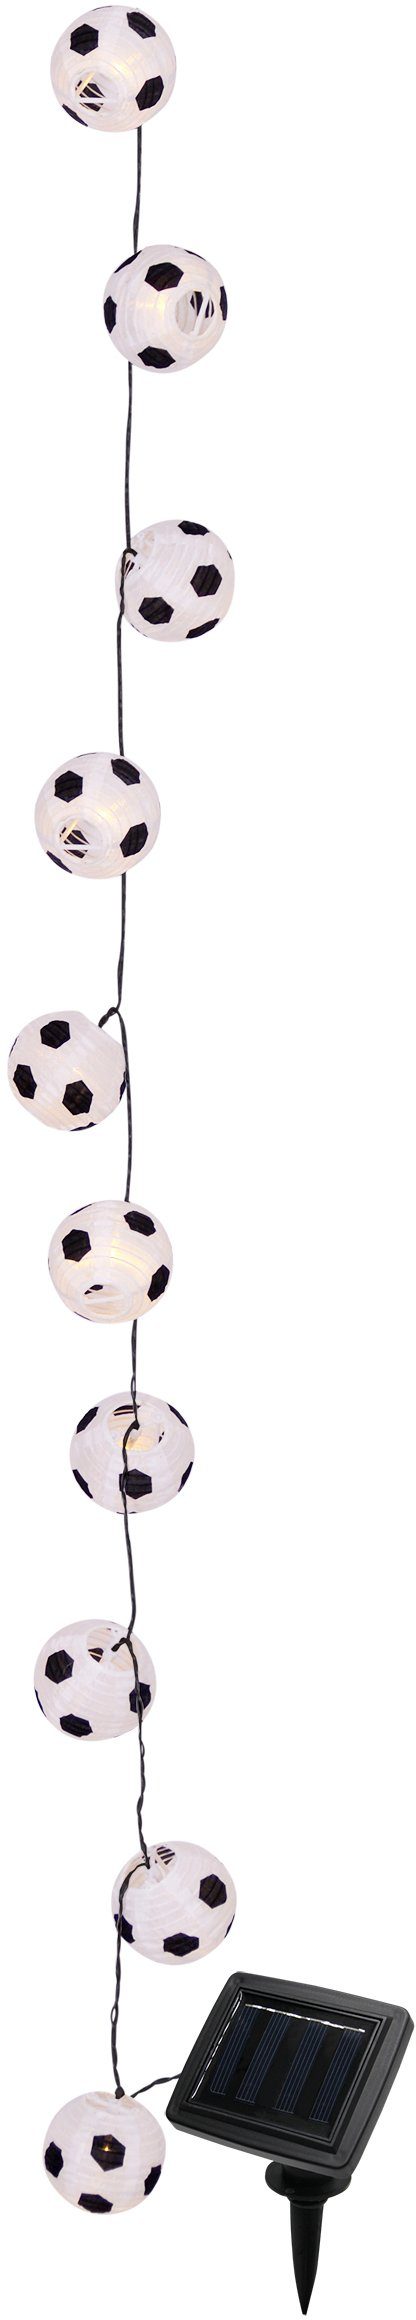 näve Lichterkette Japanballon-20er-Solar-Lichterkette, Fußball, Material: Polyester, Metall, Kunststoff, Farbe: weiß/schwarz | Lichterketten